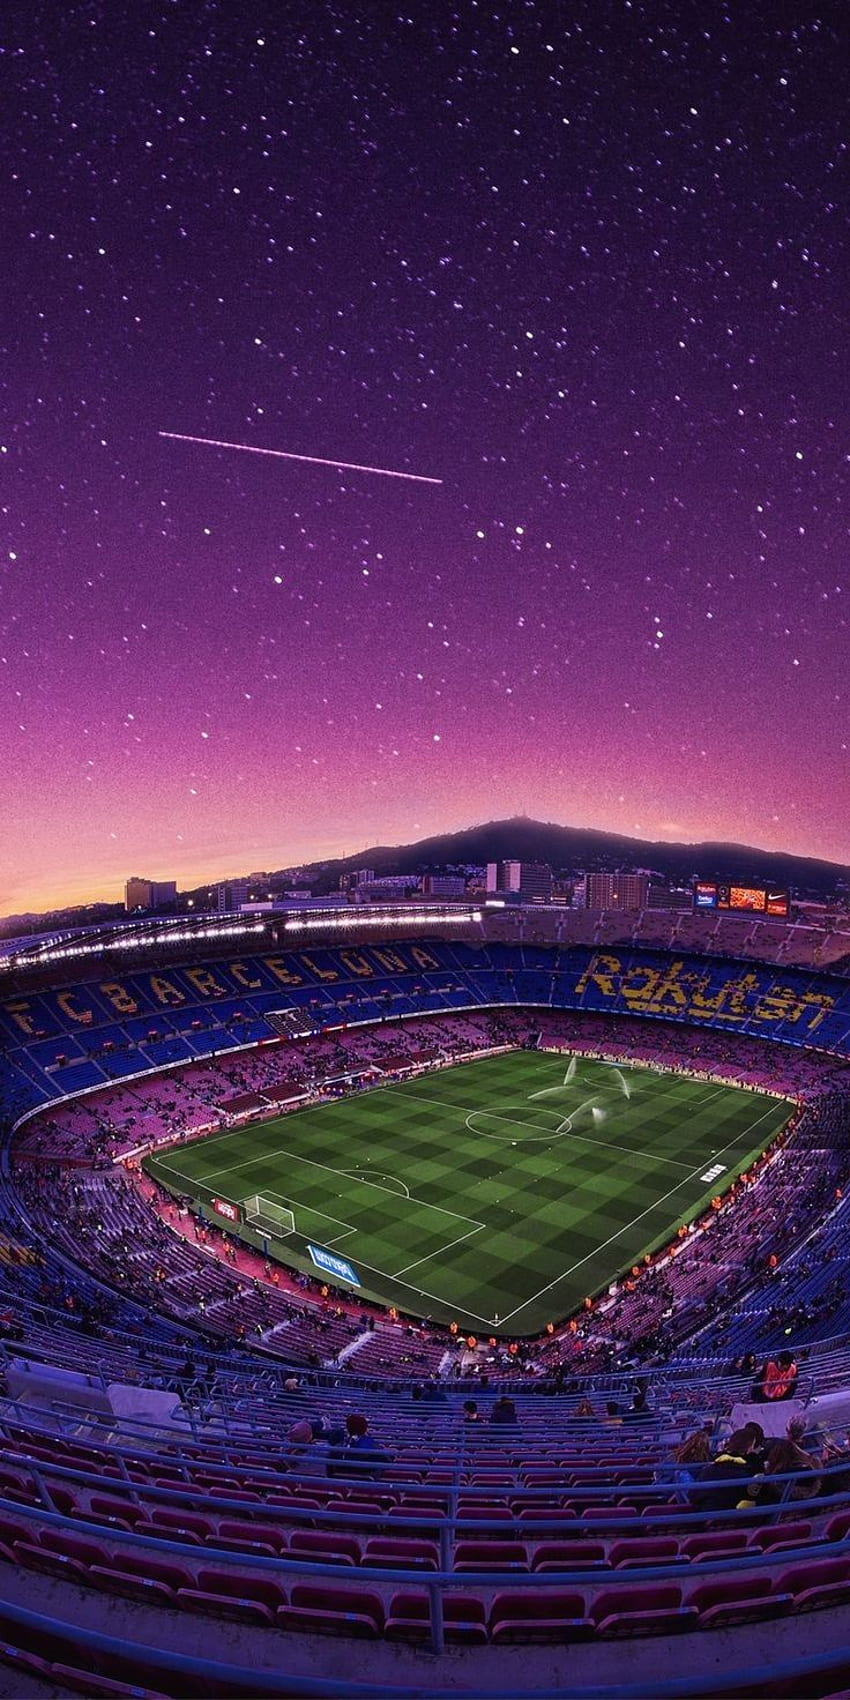 Camp Nou Photos Download The BEST Free Camp Nou Stock Photos  HD Images